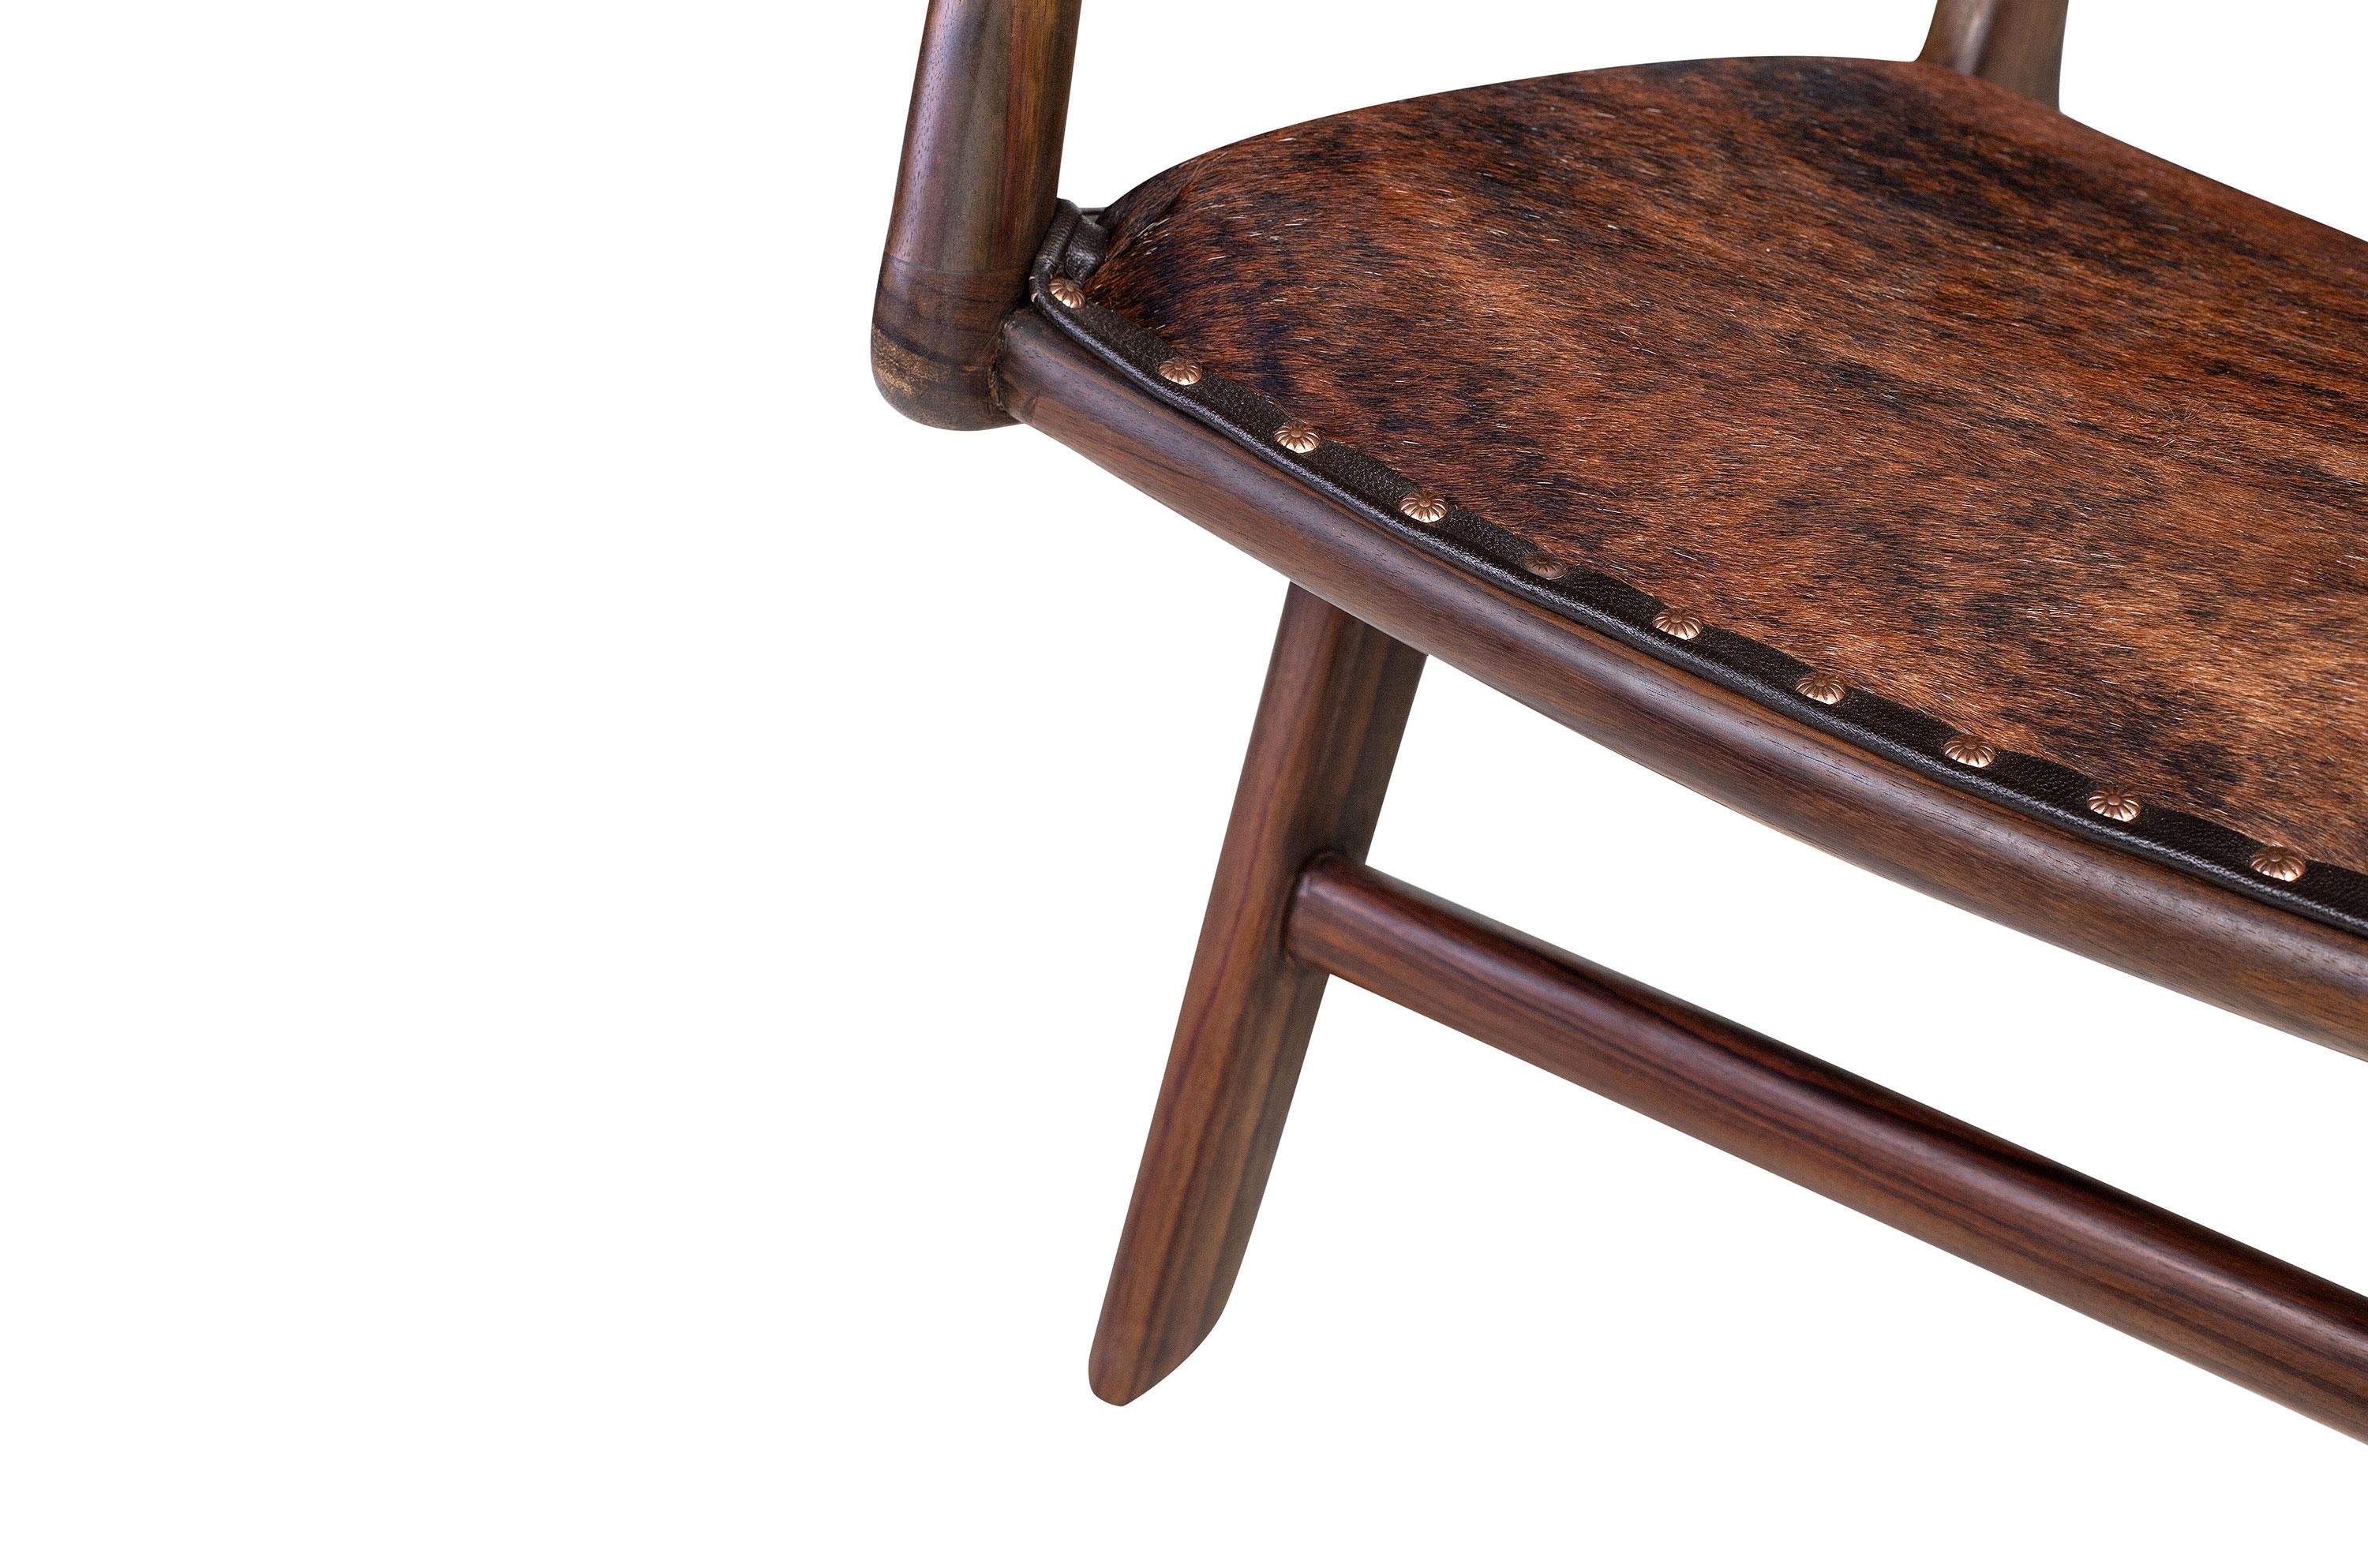 Scandinavian Modern Midcentury Design and Danish Look Teak Wooden and Leather Lounge Armchair